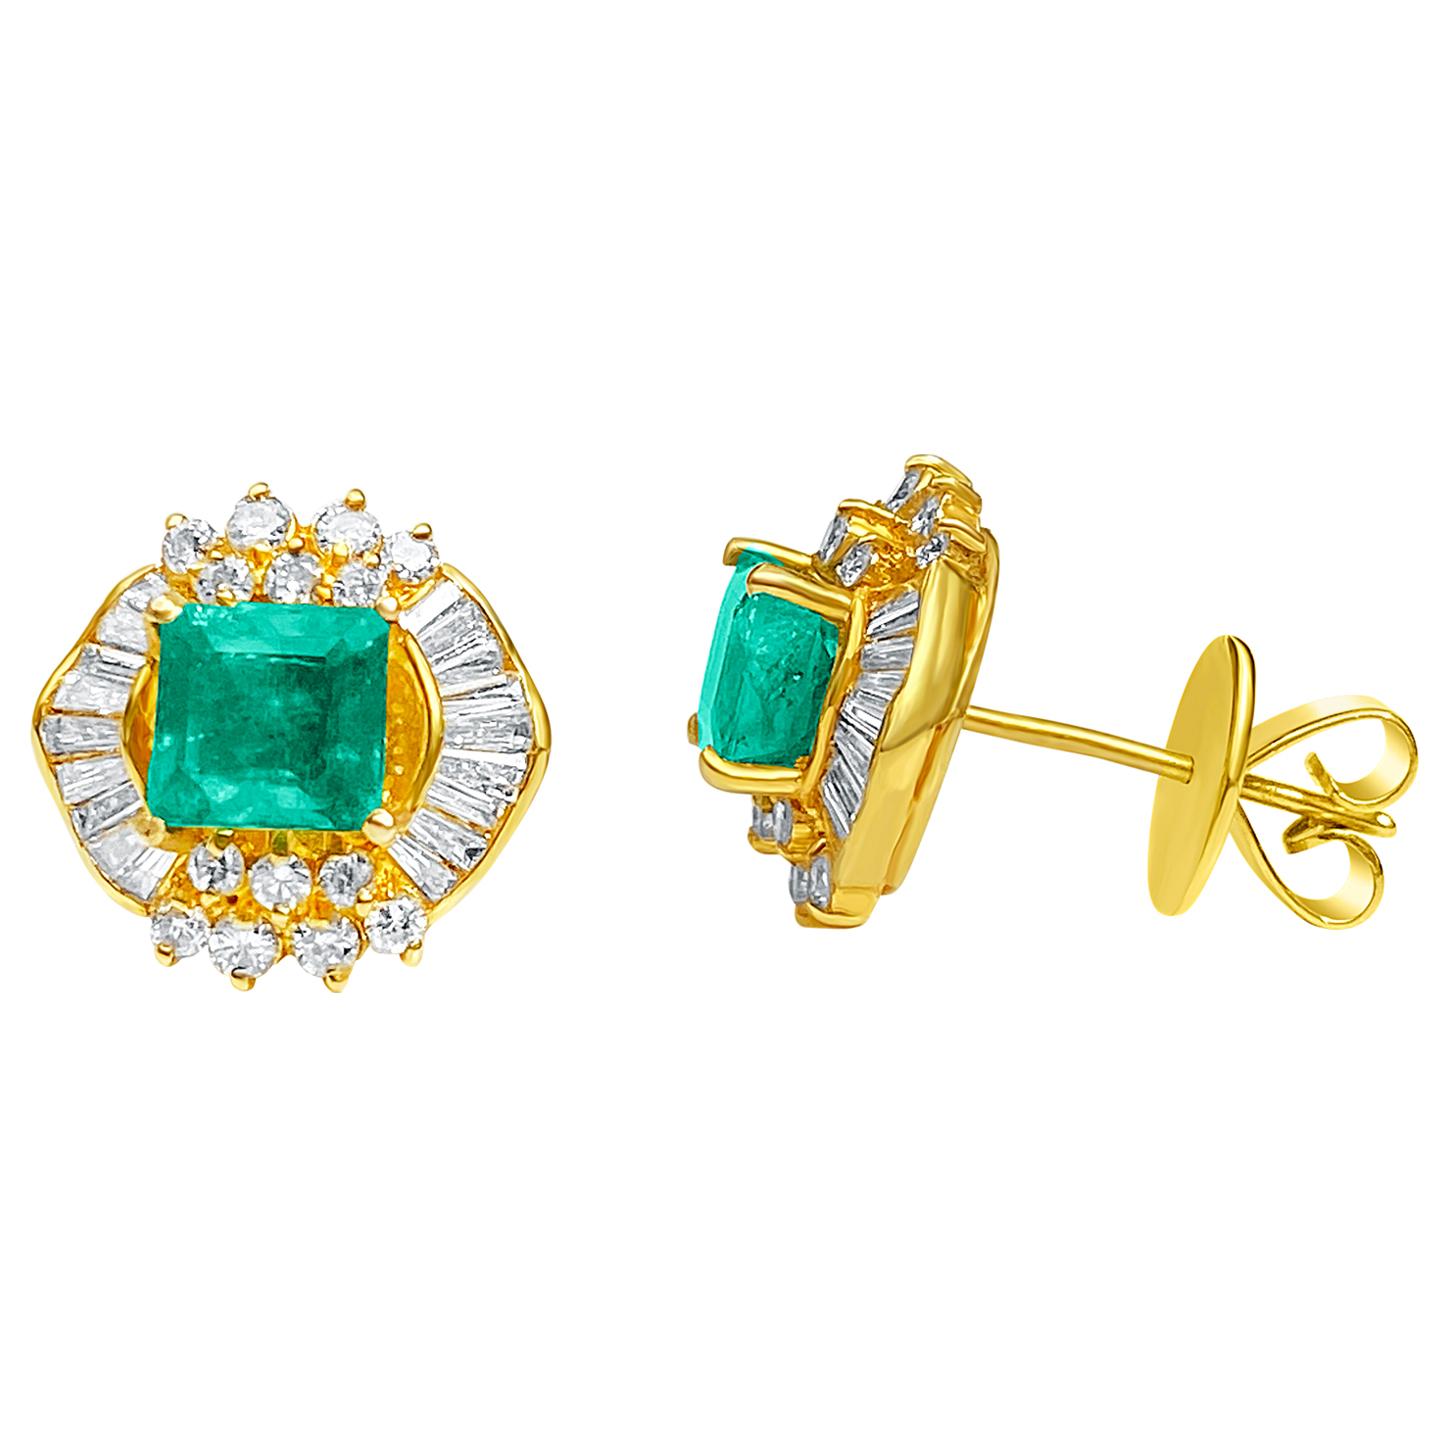 1.70 Carat Emerald-Cut Colombian Emerald and Diamond 18 Karat Gold Earrings